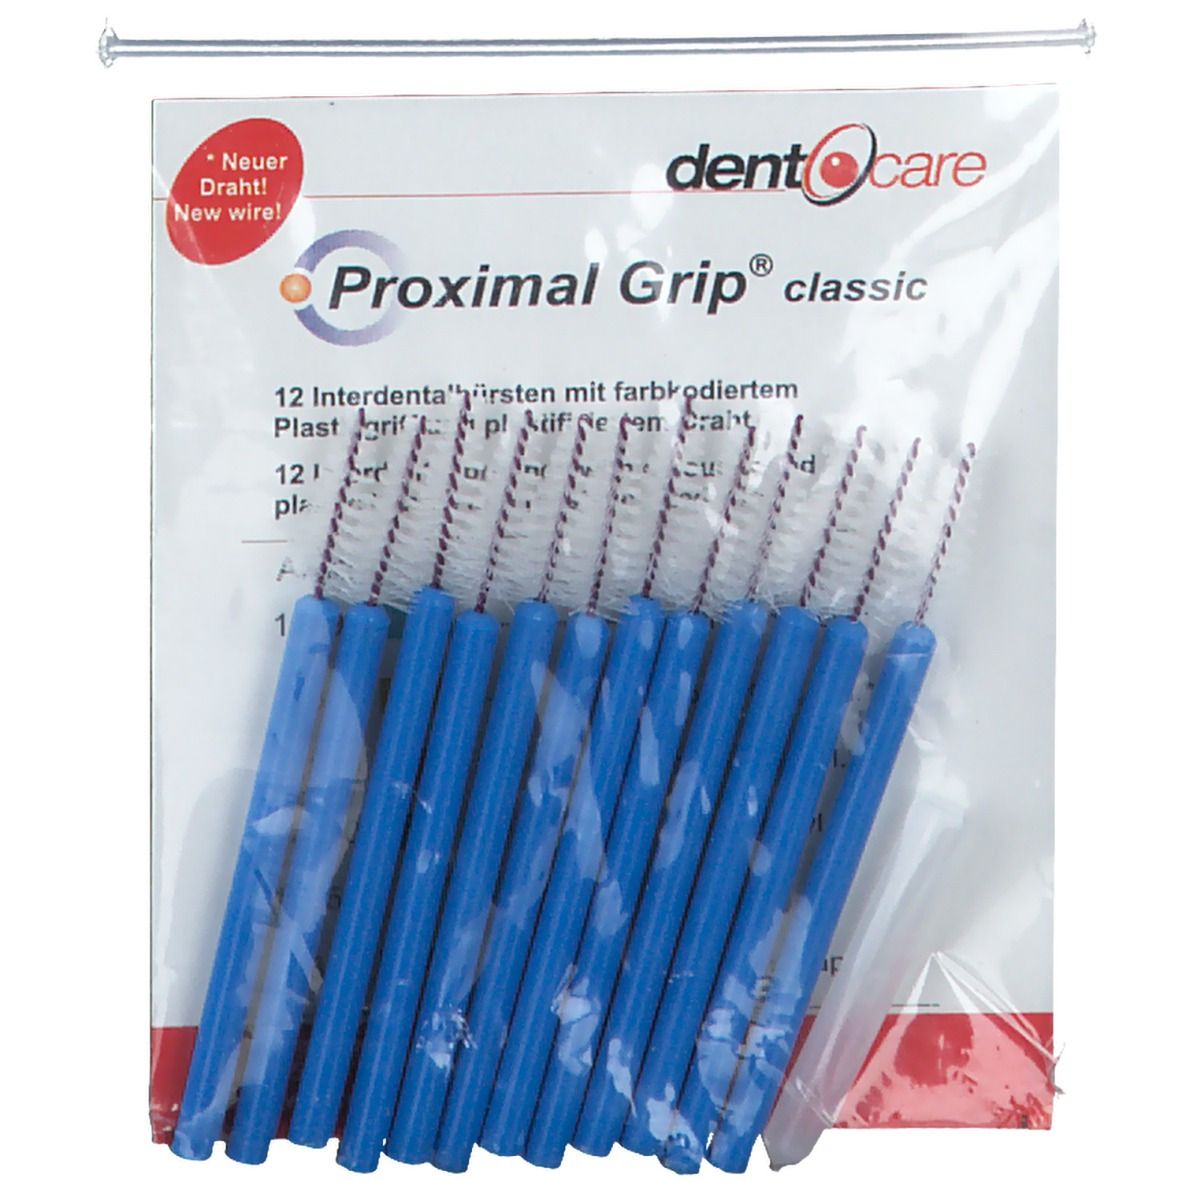 Dent-o-care Proximal Grip blau konisch Interdentalbürste 0,95 mm